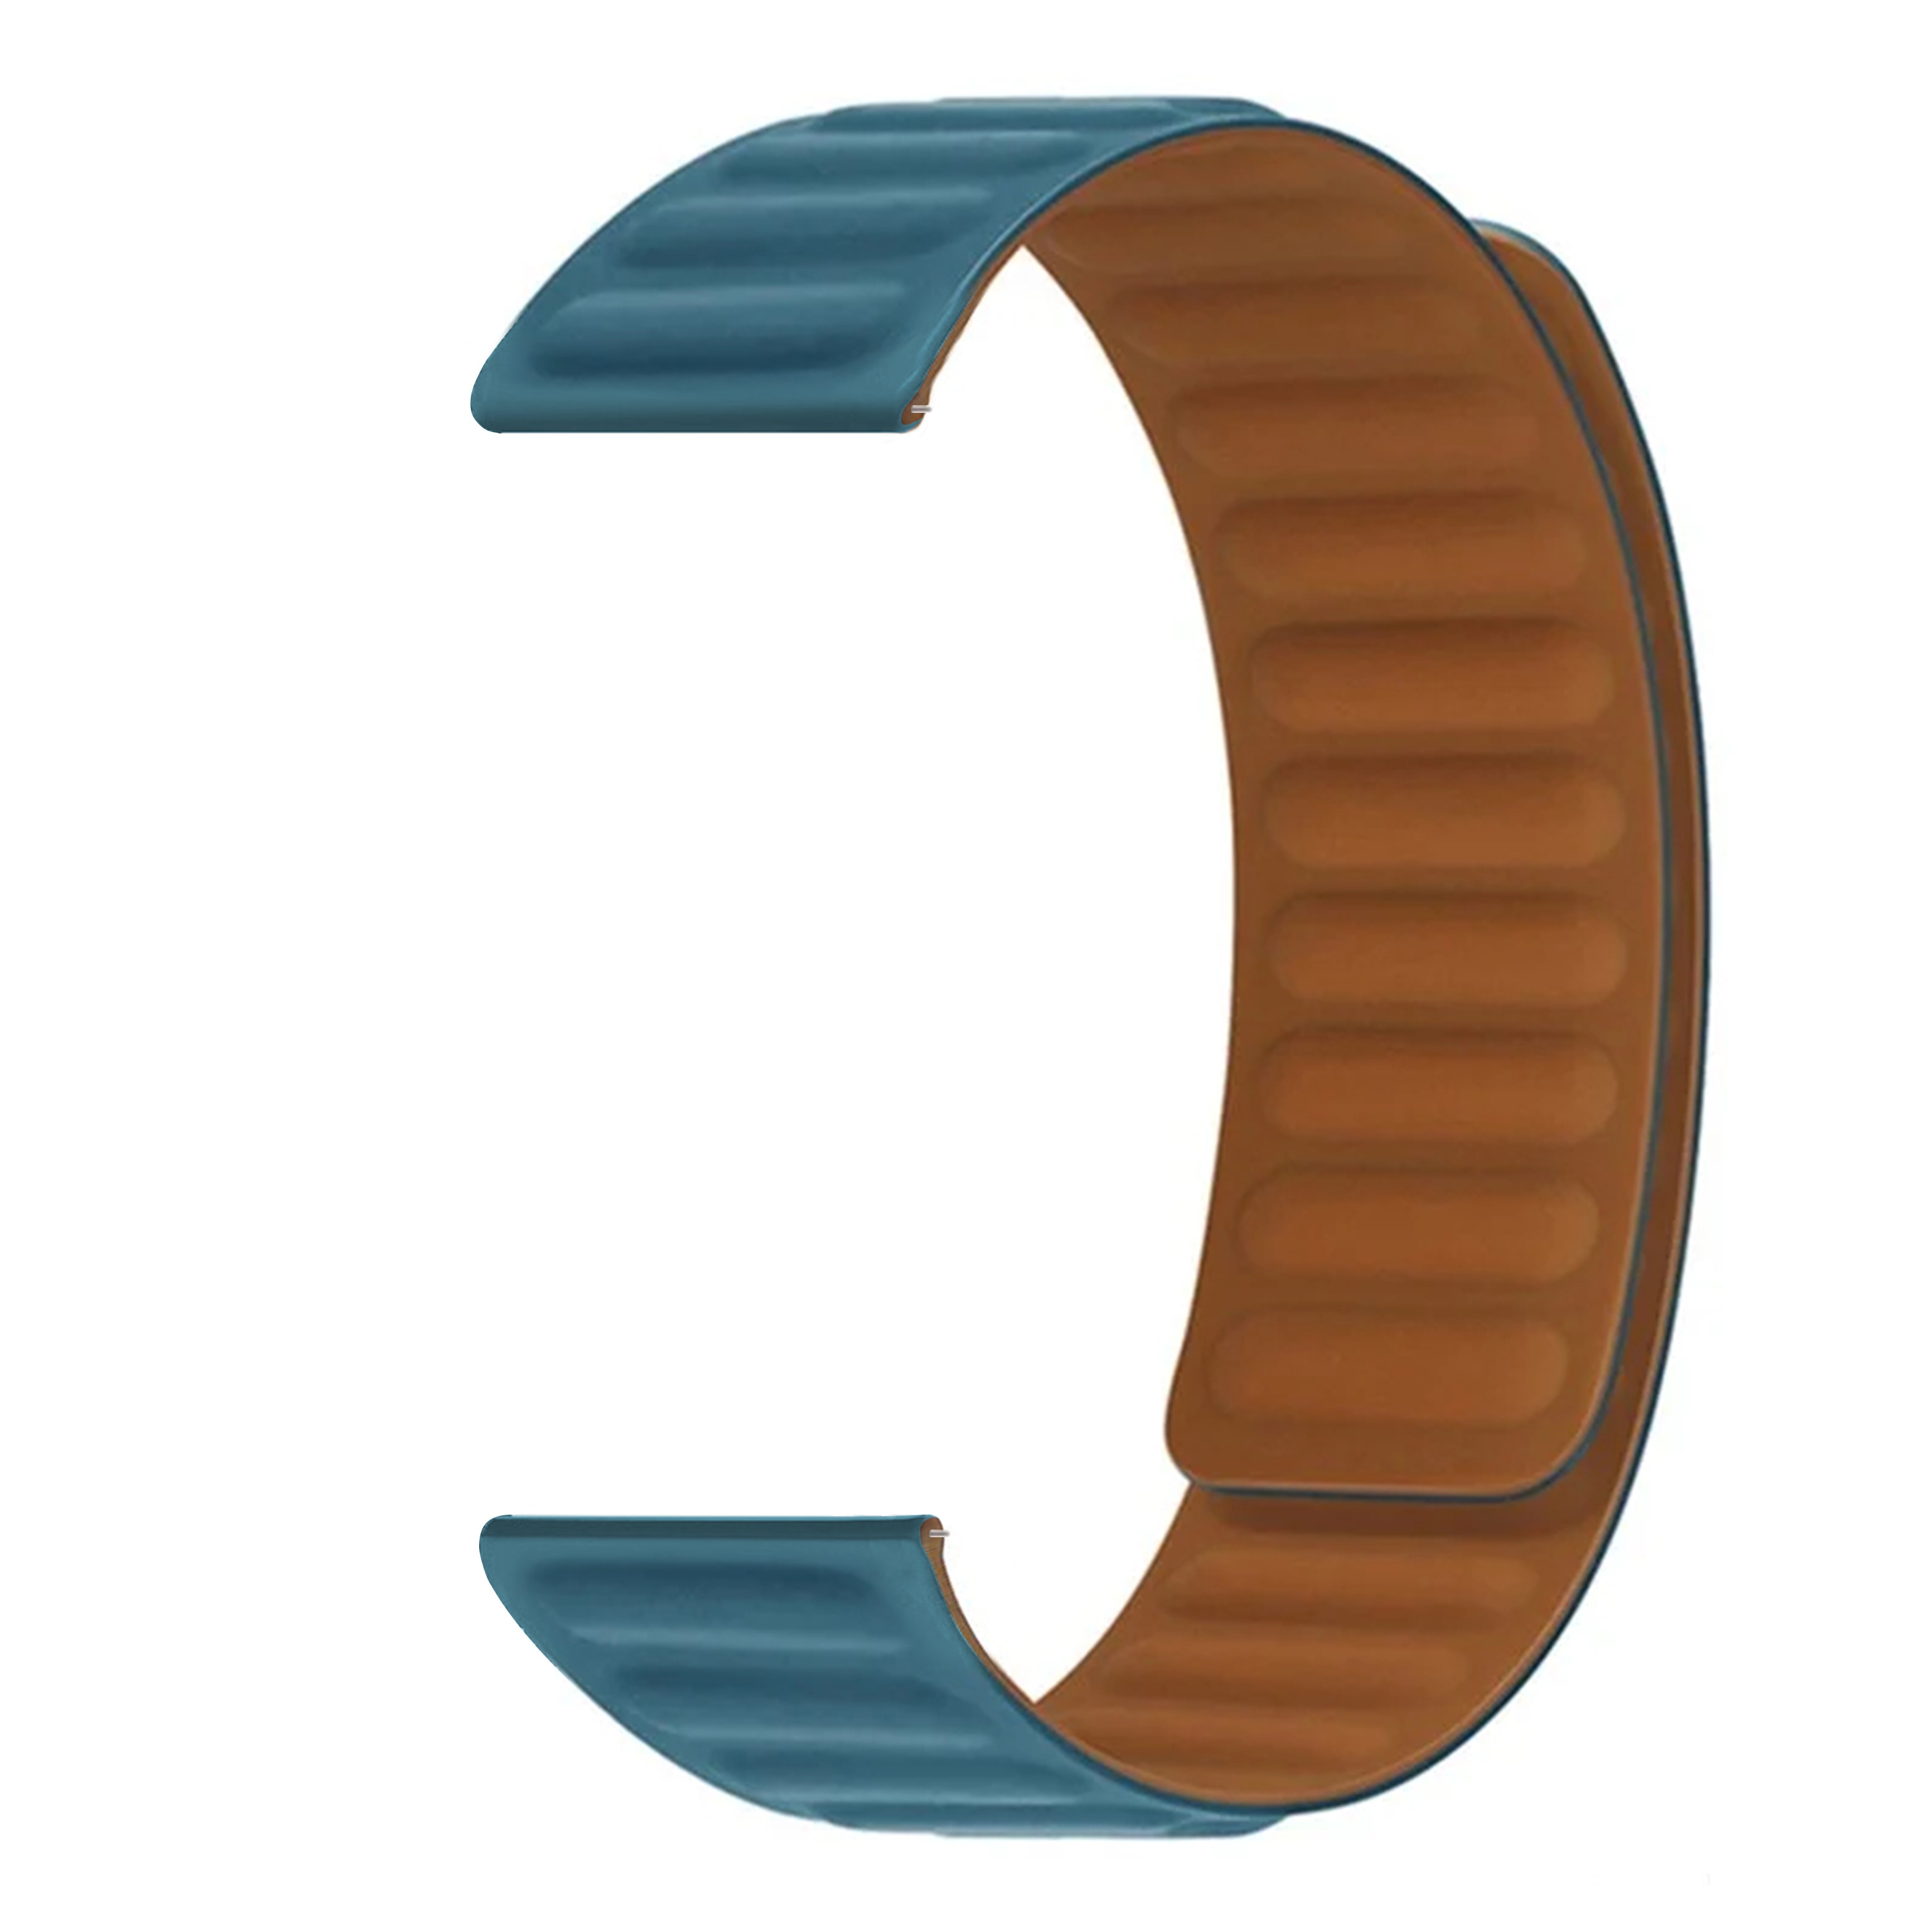 Hama Fit Watch 4910 Magnetische Armband aus Silikon blau